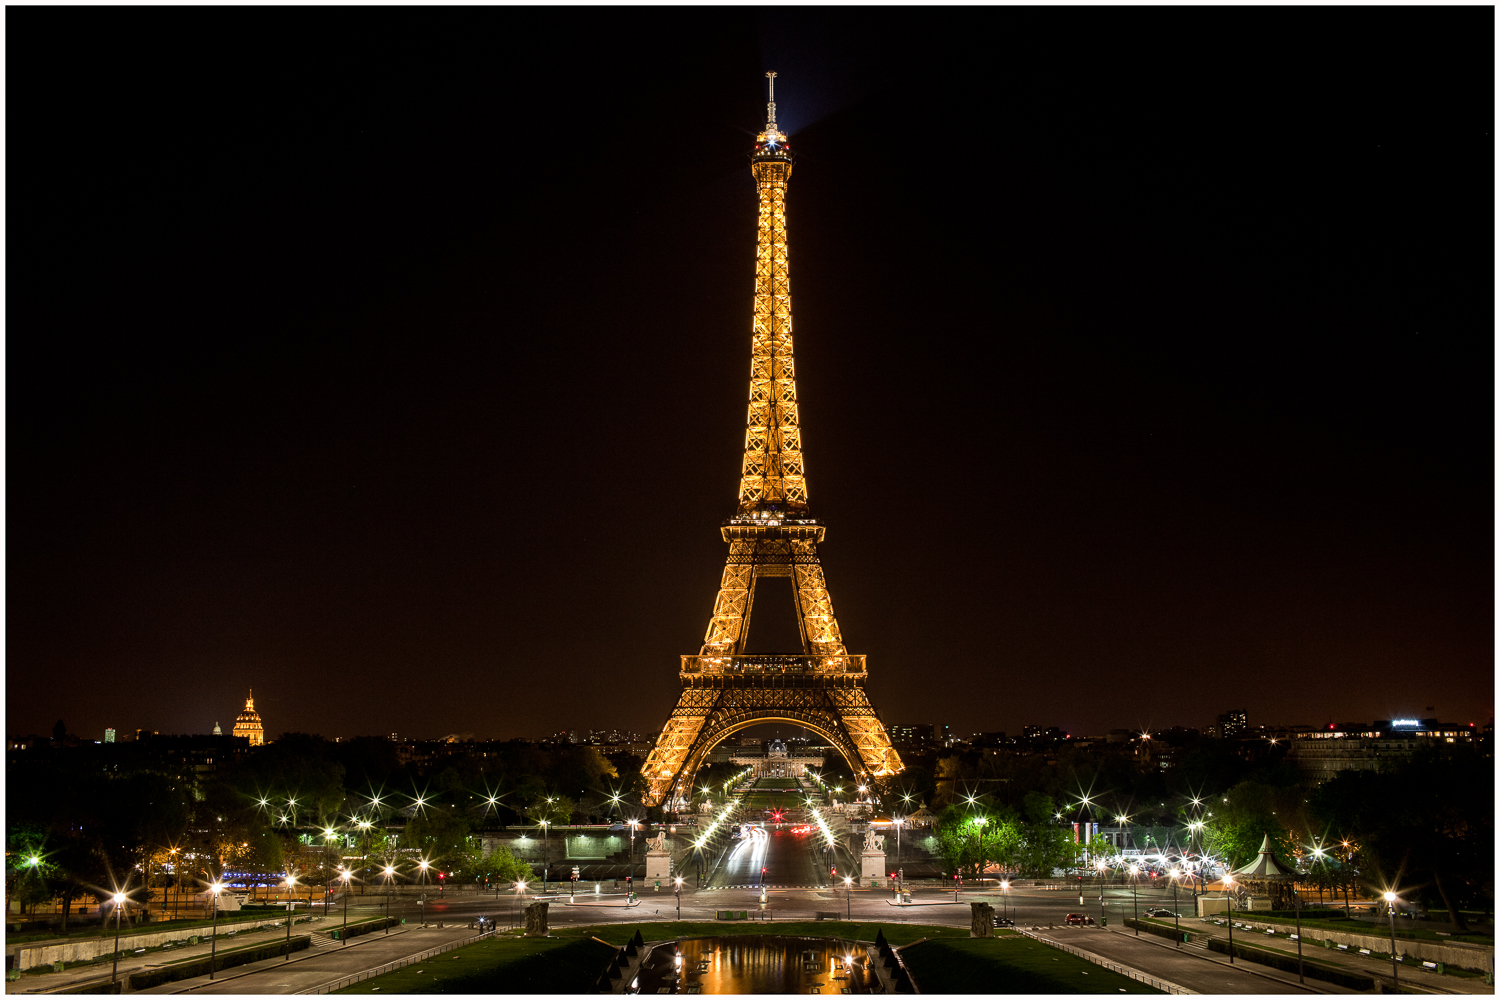 Eiffel Tower at Night.jpg